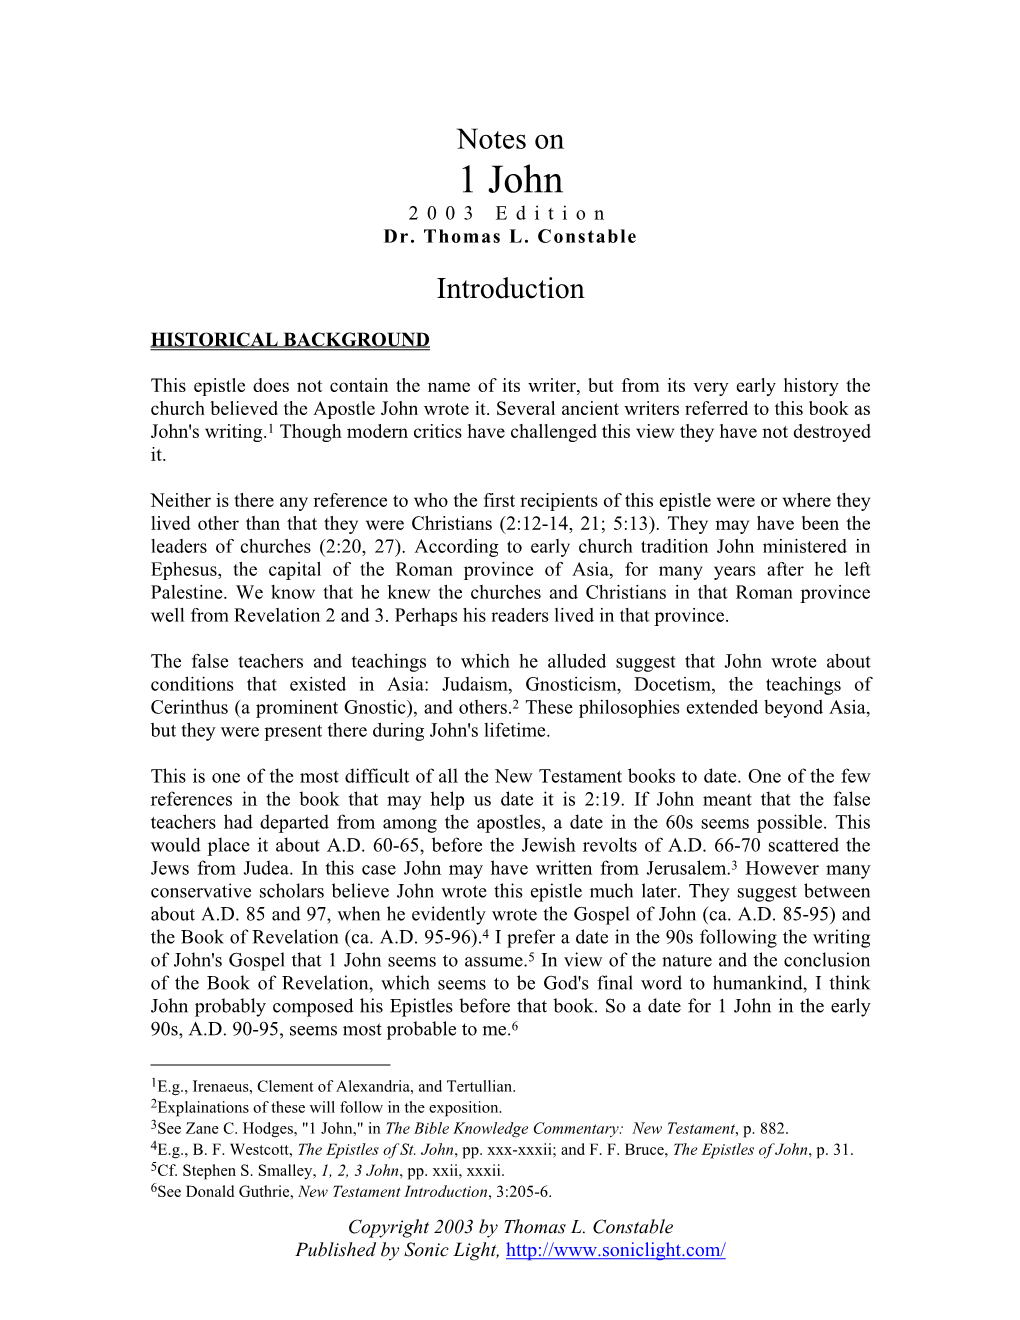 1 John 2003 Edition Dr